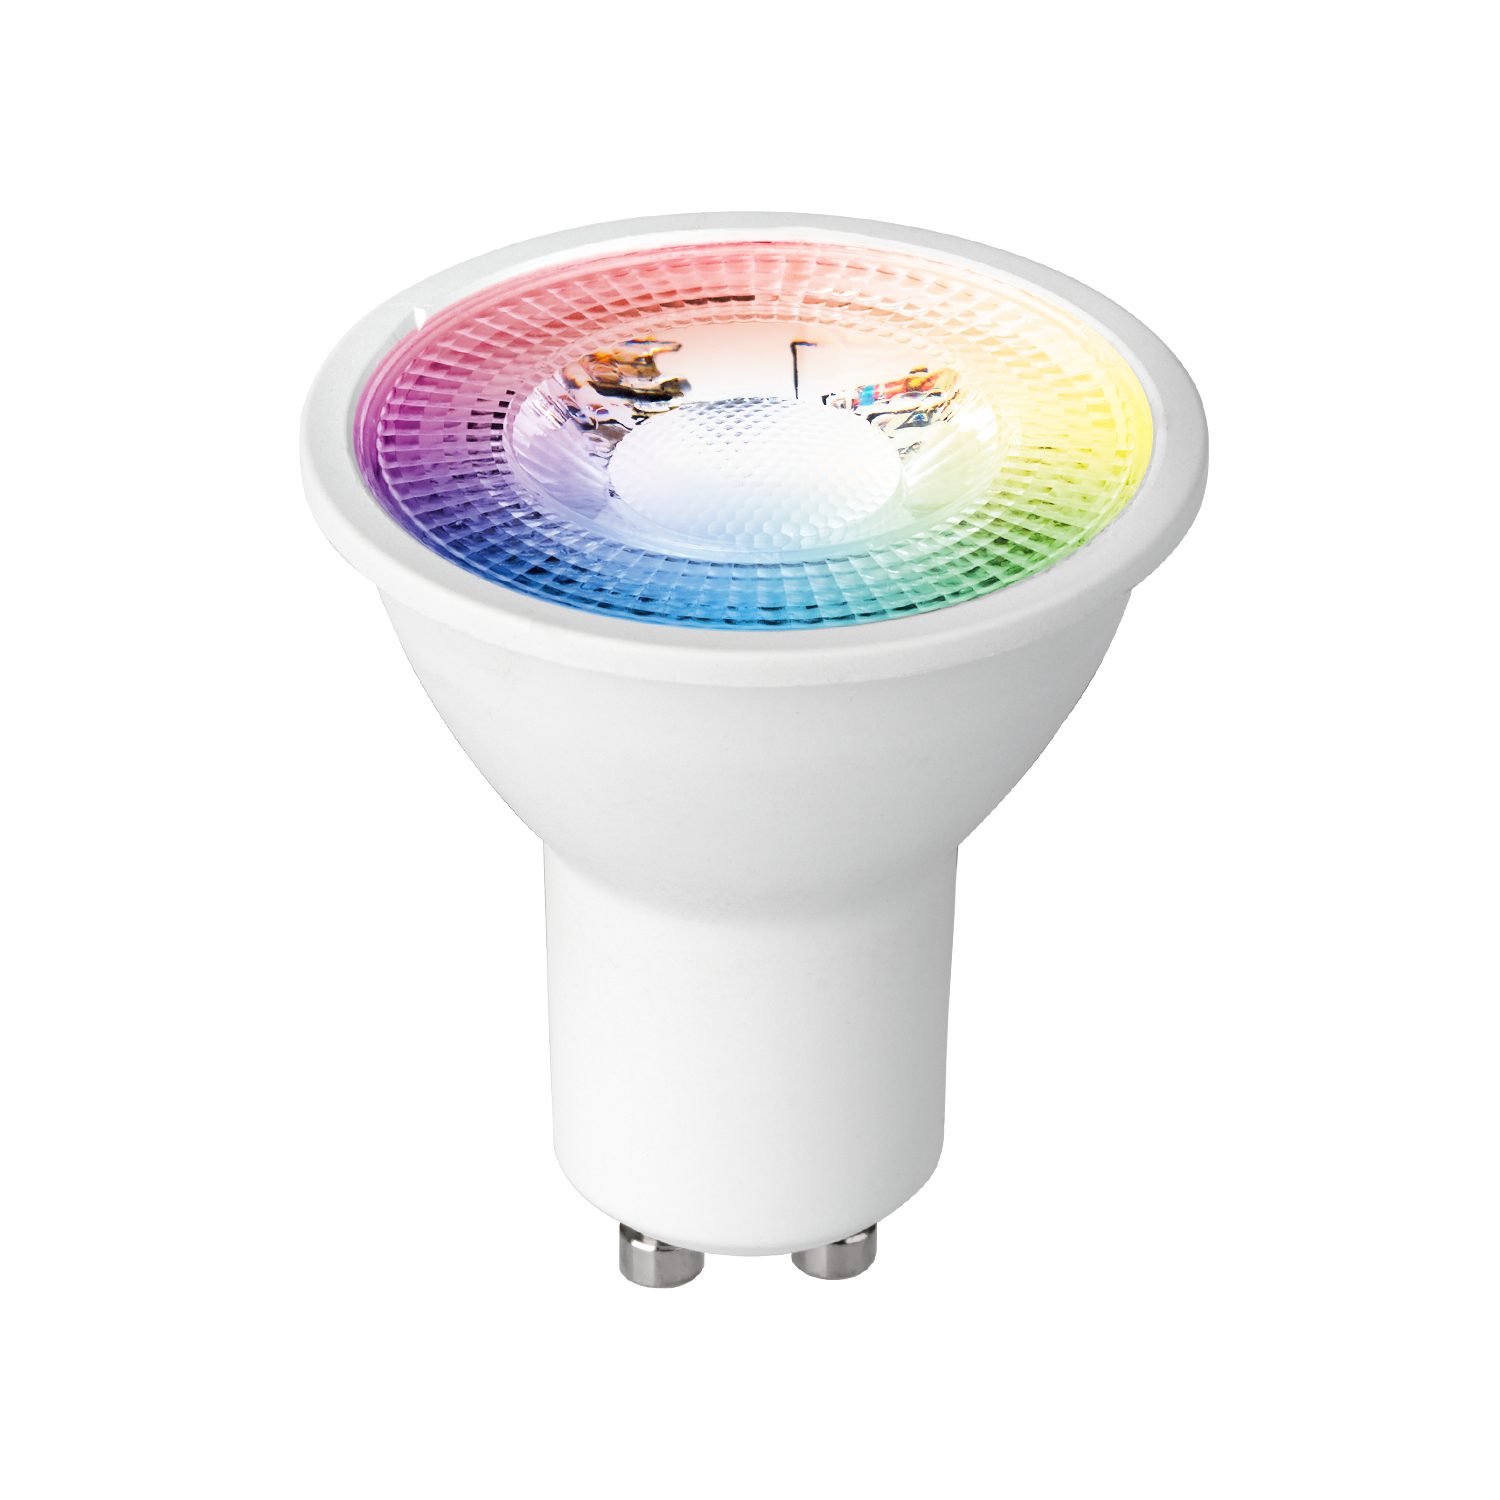 LED 3W von 10er Einbaustrahler - LEDANDO weiß Set LED LEDANDO mit Einbaustrahler RGB GU10 LED in